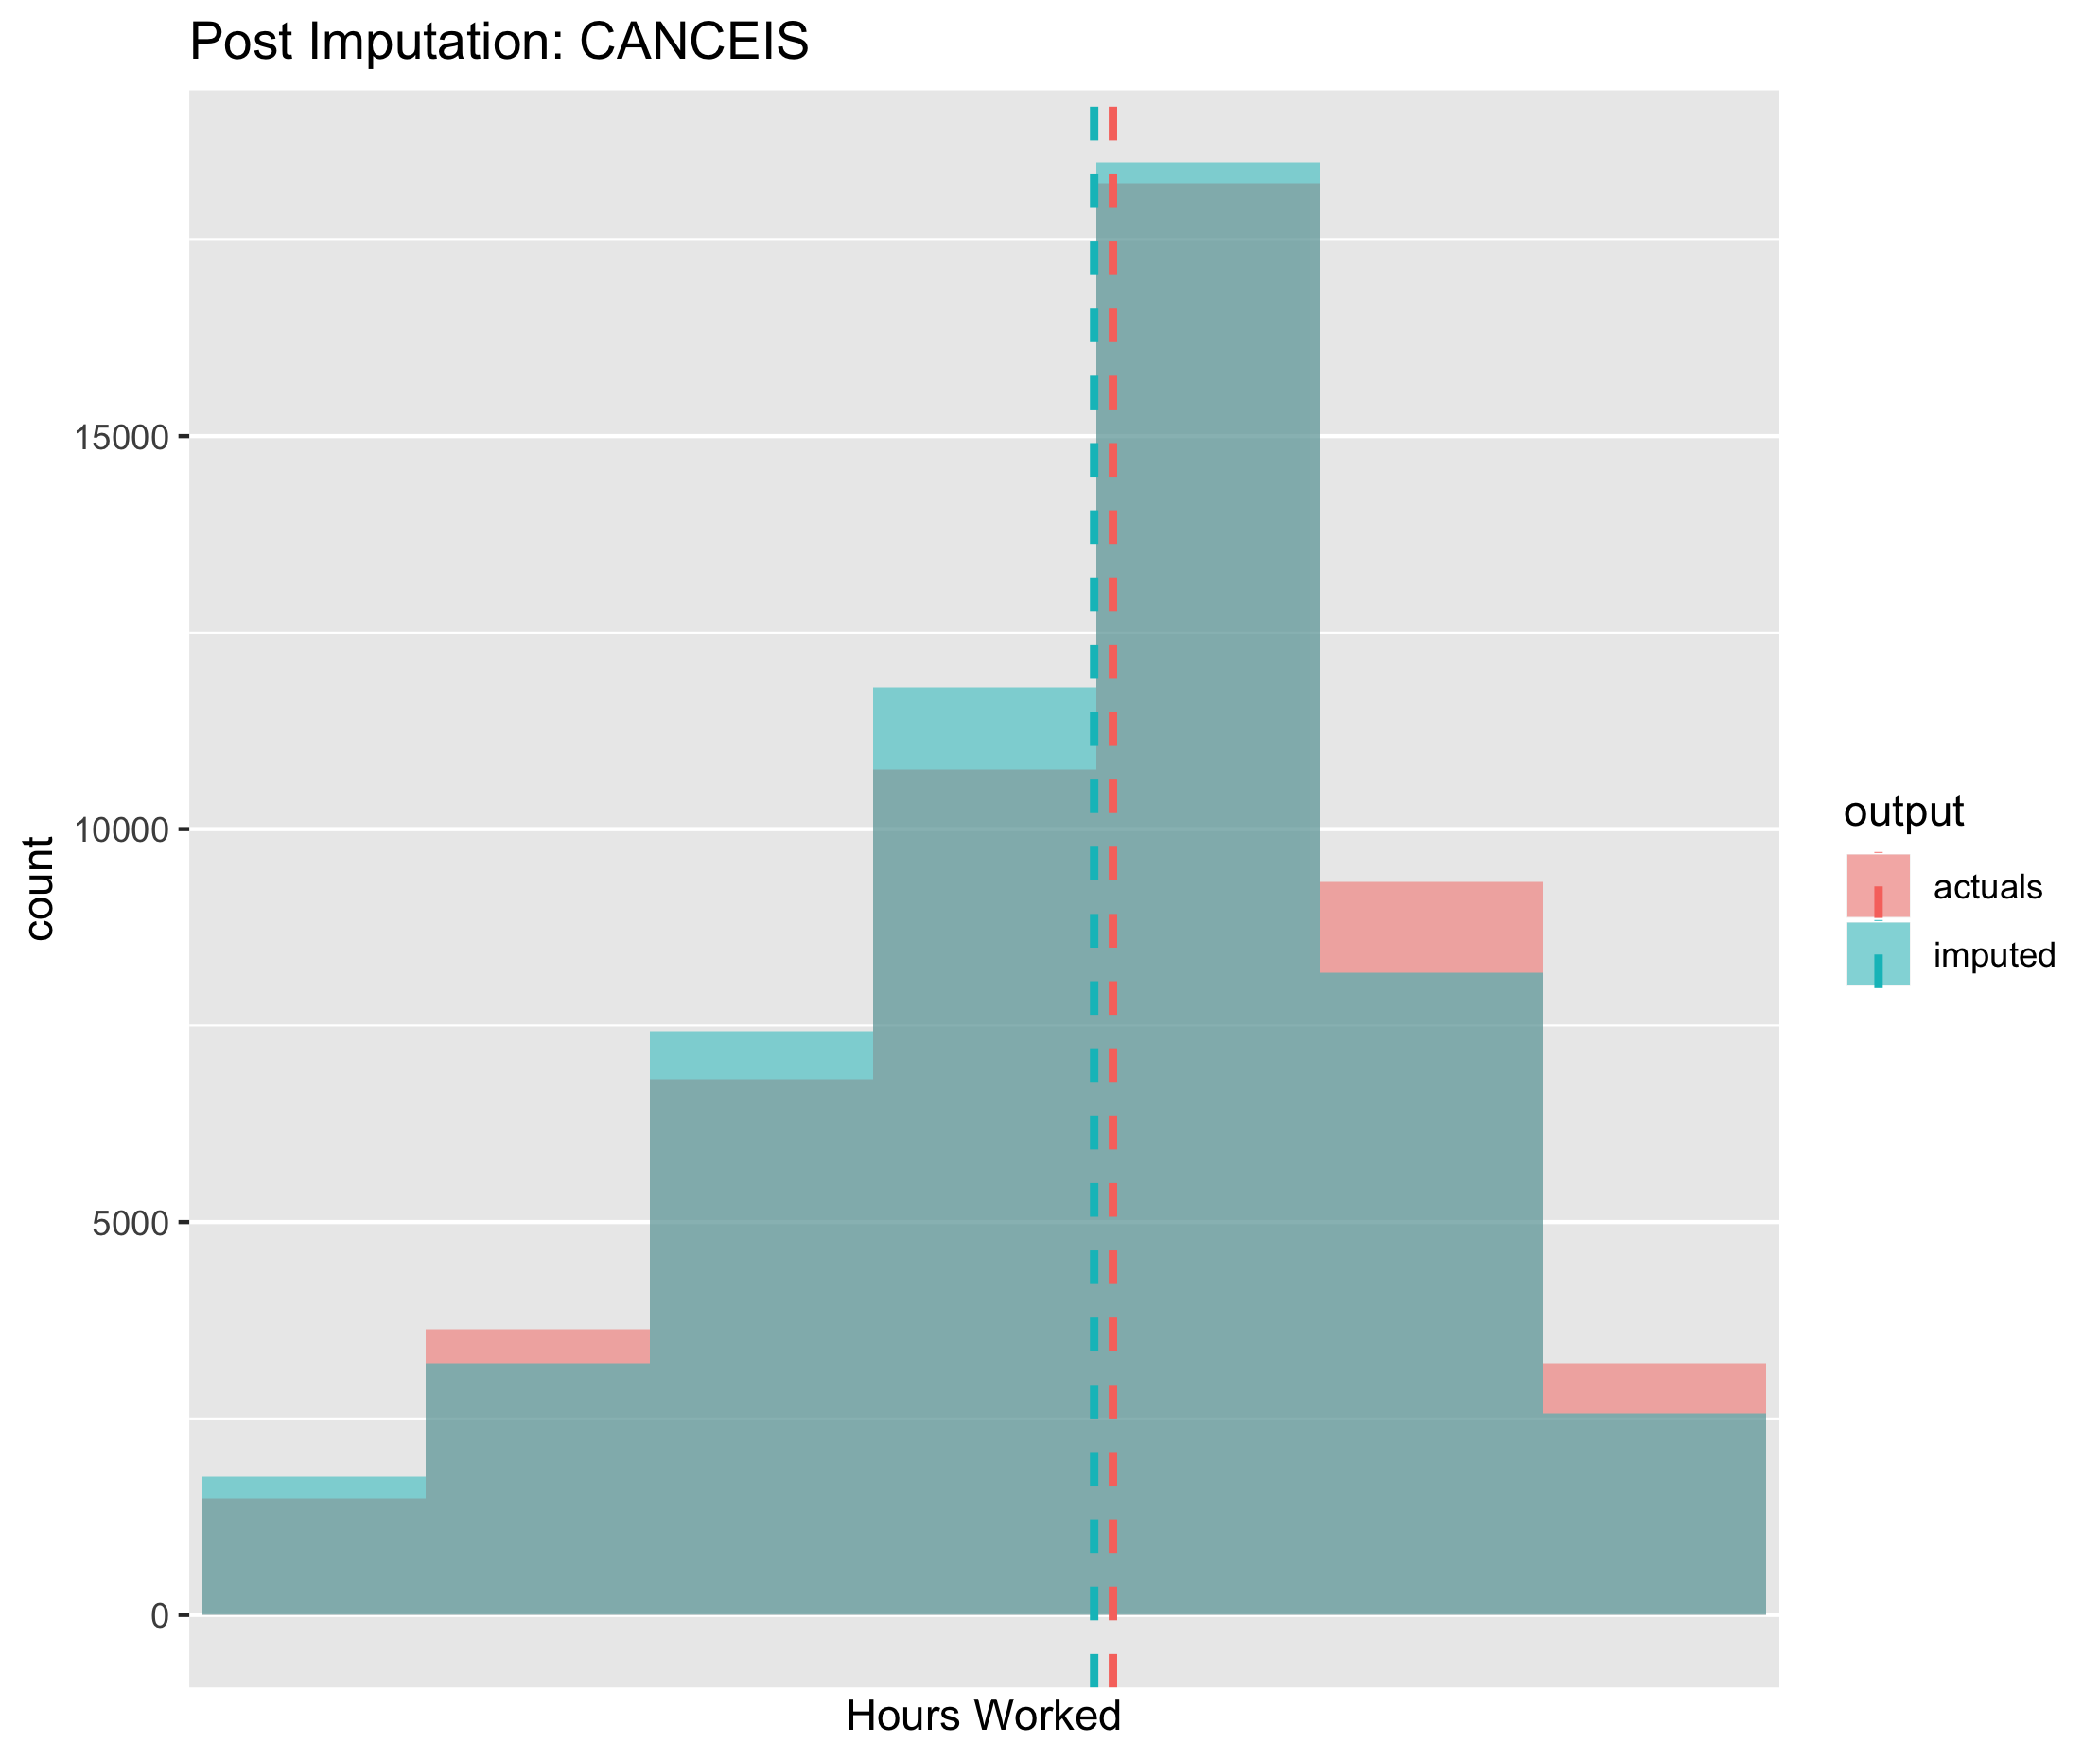 Figure 6.11. Post imputation distribution of economic activity using CANCEIS imputation